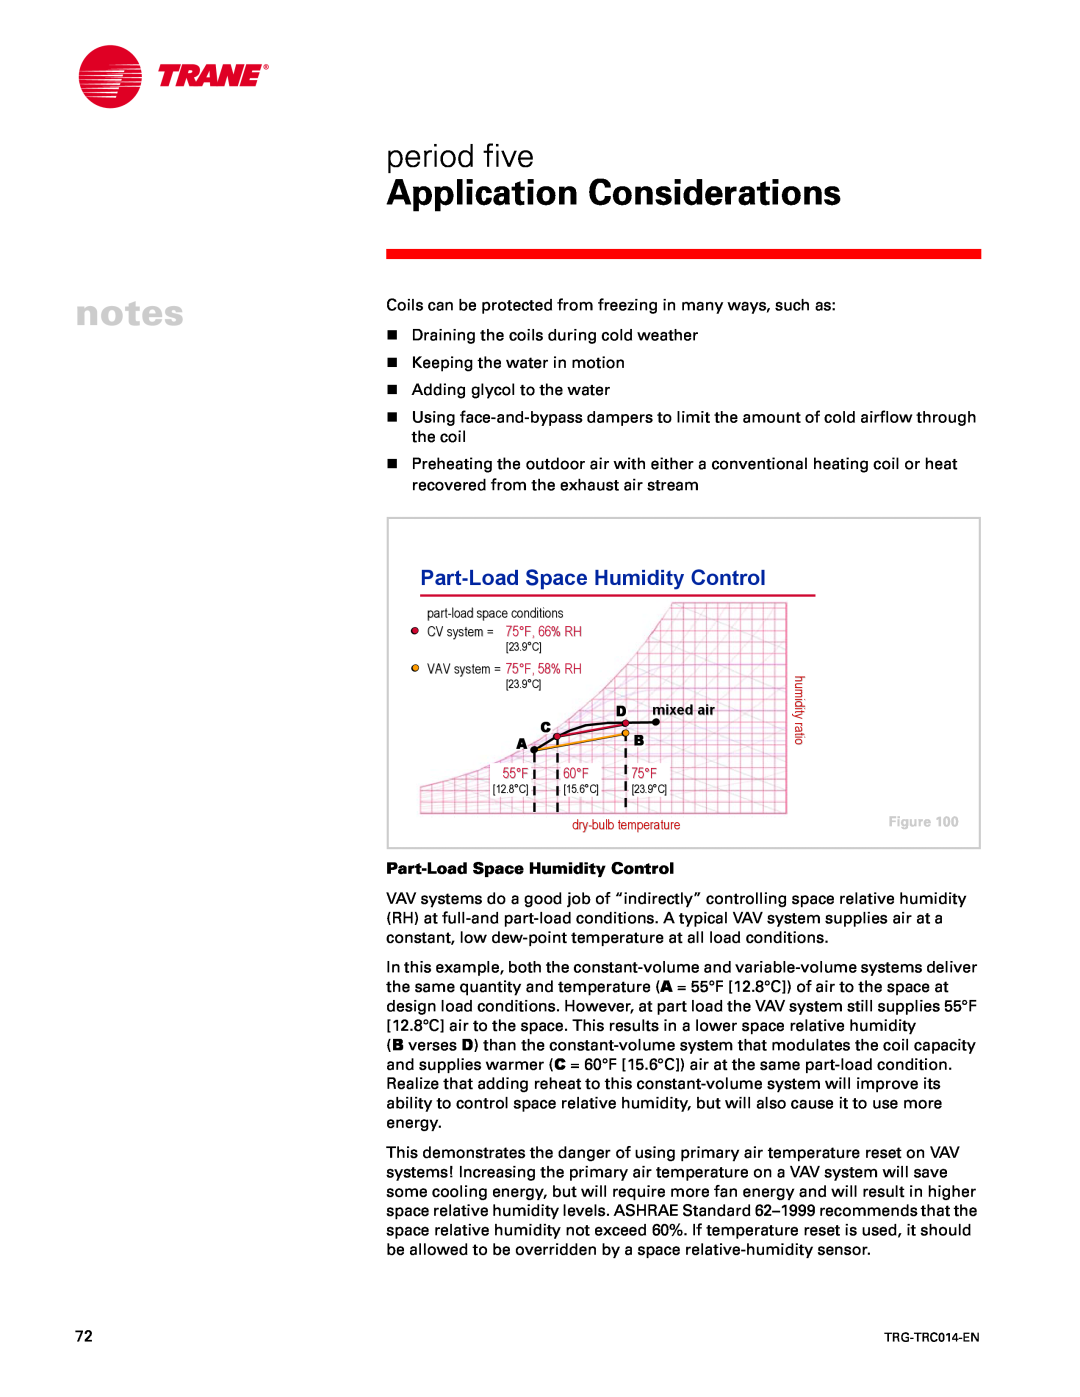 Trane TRG-TRC014-EN manual Part-LoadSpace Humidity Control, Application Considerations, period five 